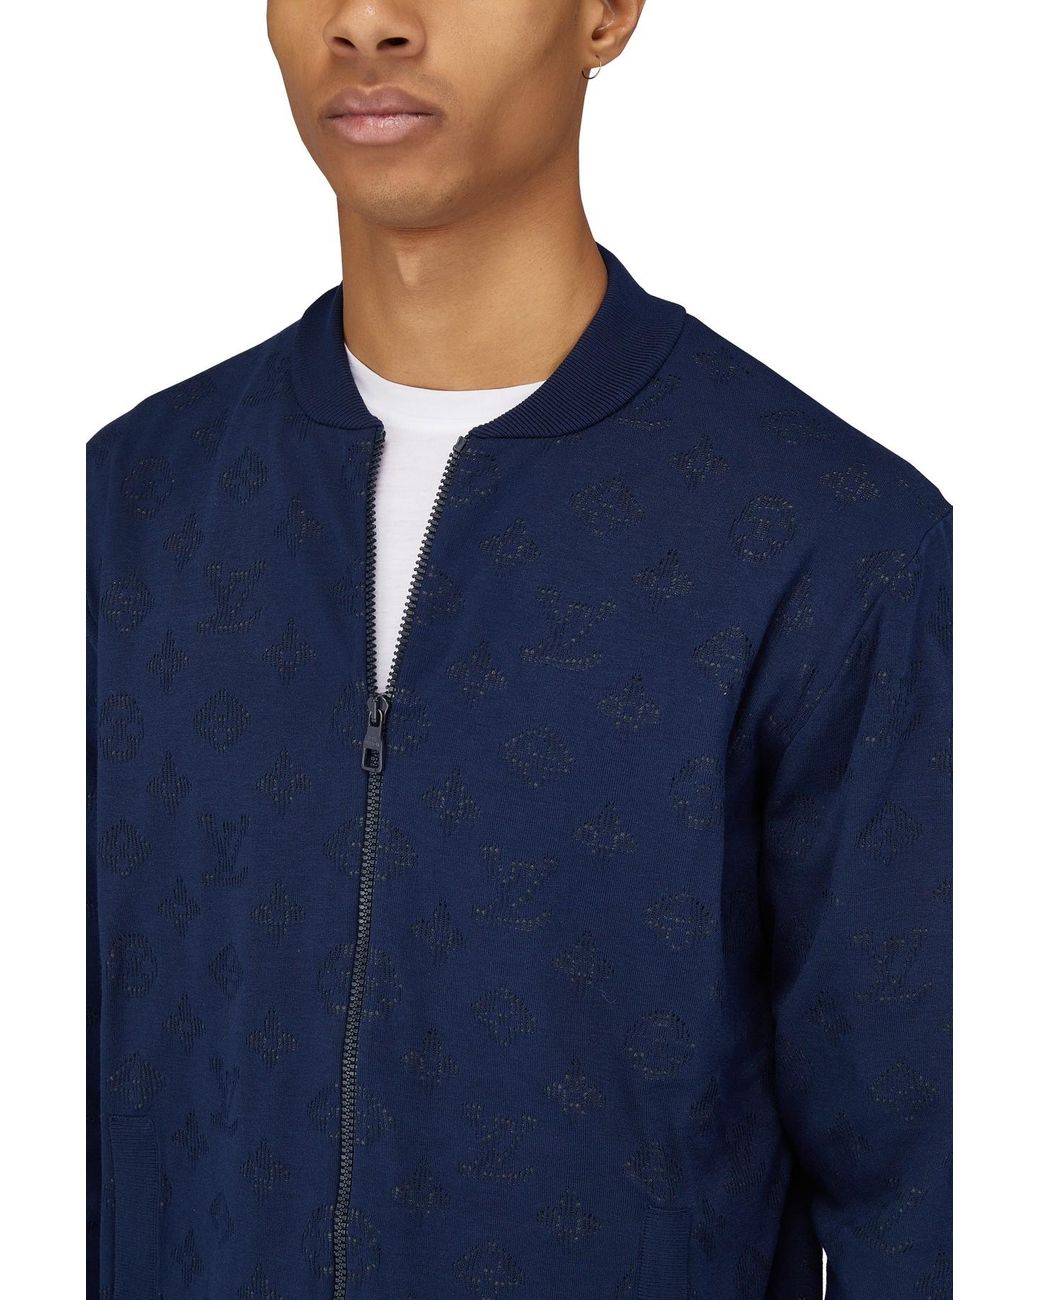 Louis Vuitton  Jackets  Coats  Mens Louis Vuitton Monogram Reversible Bomber  Jacket  Poshmark